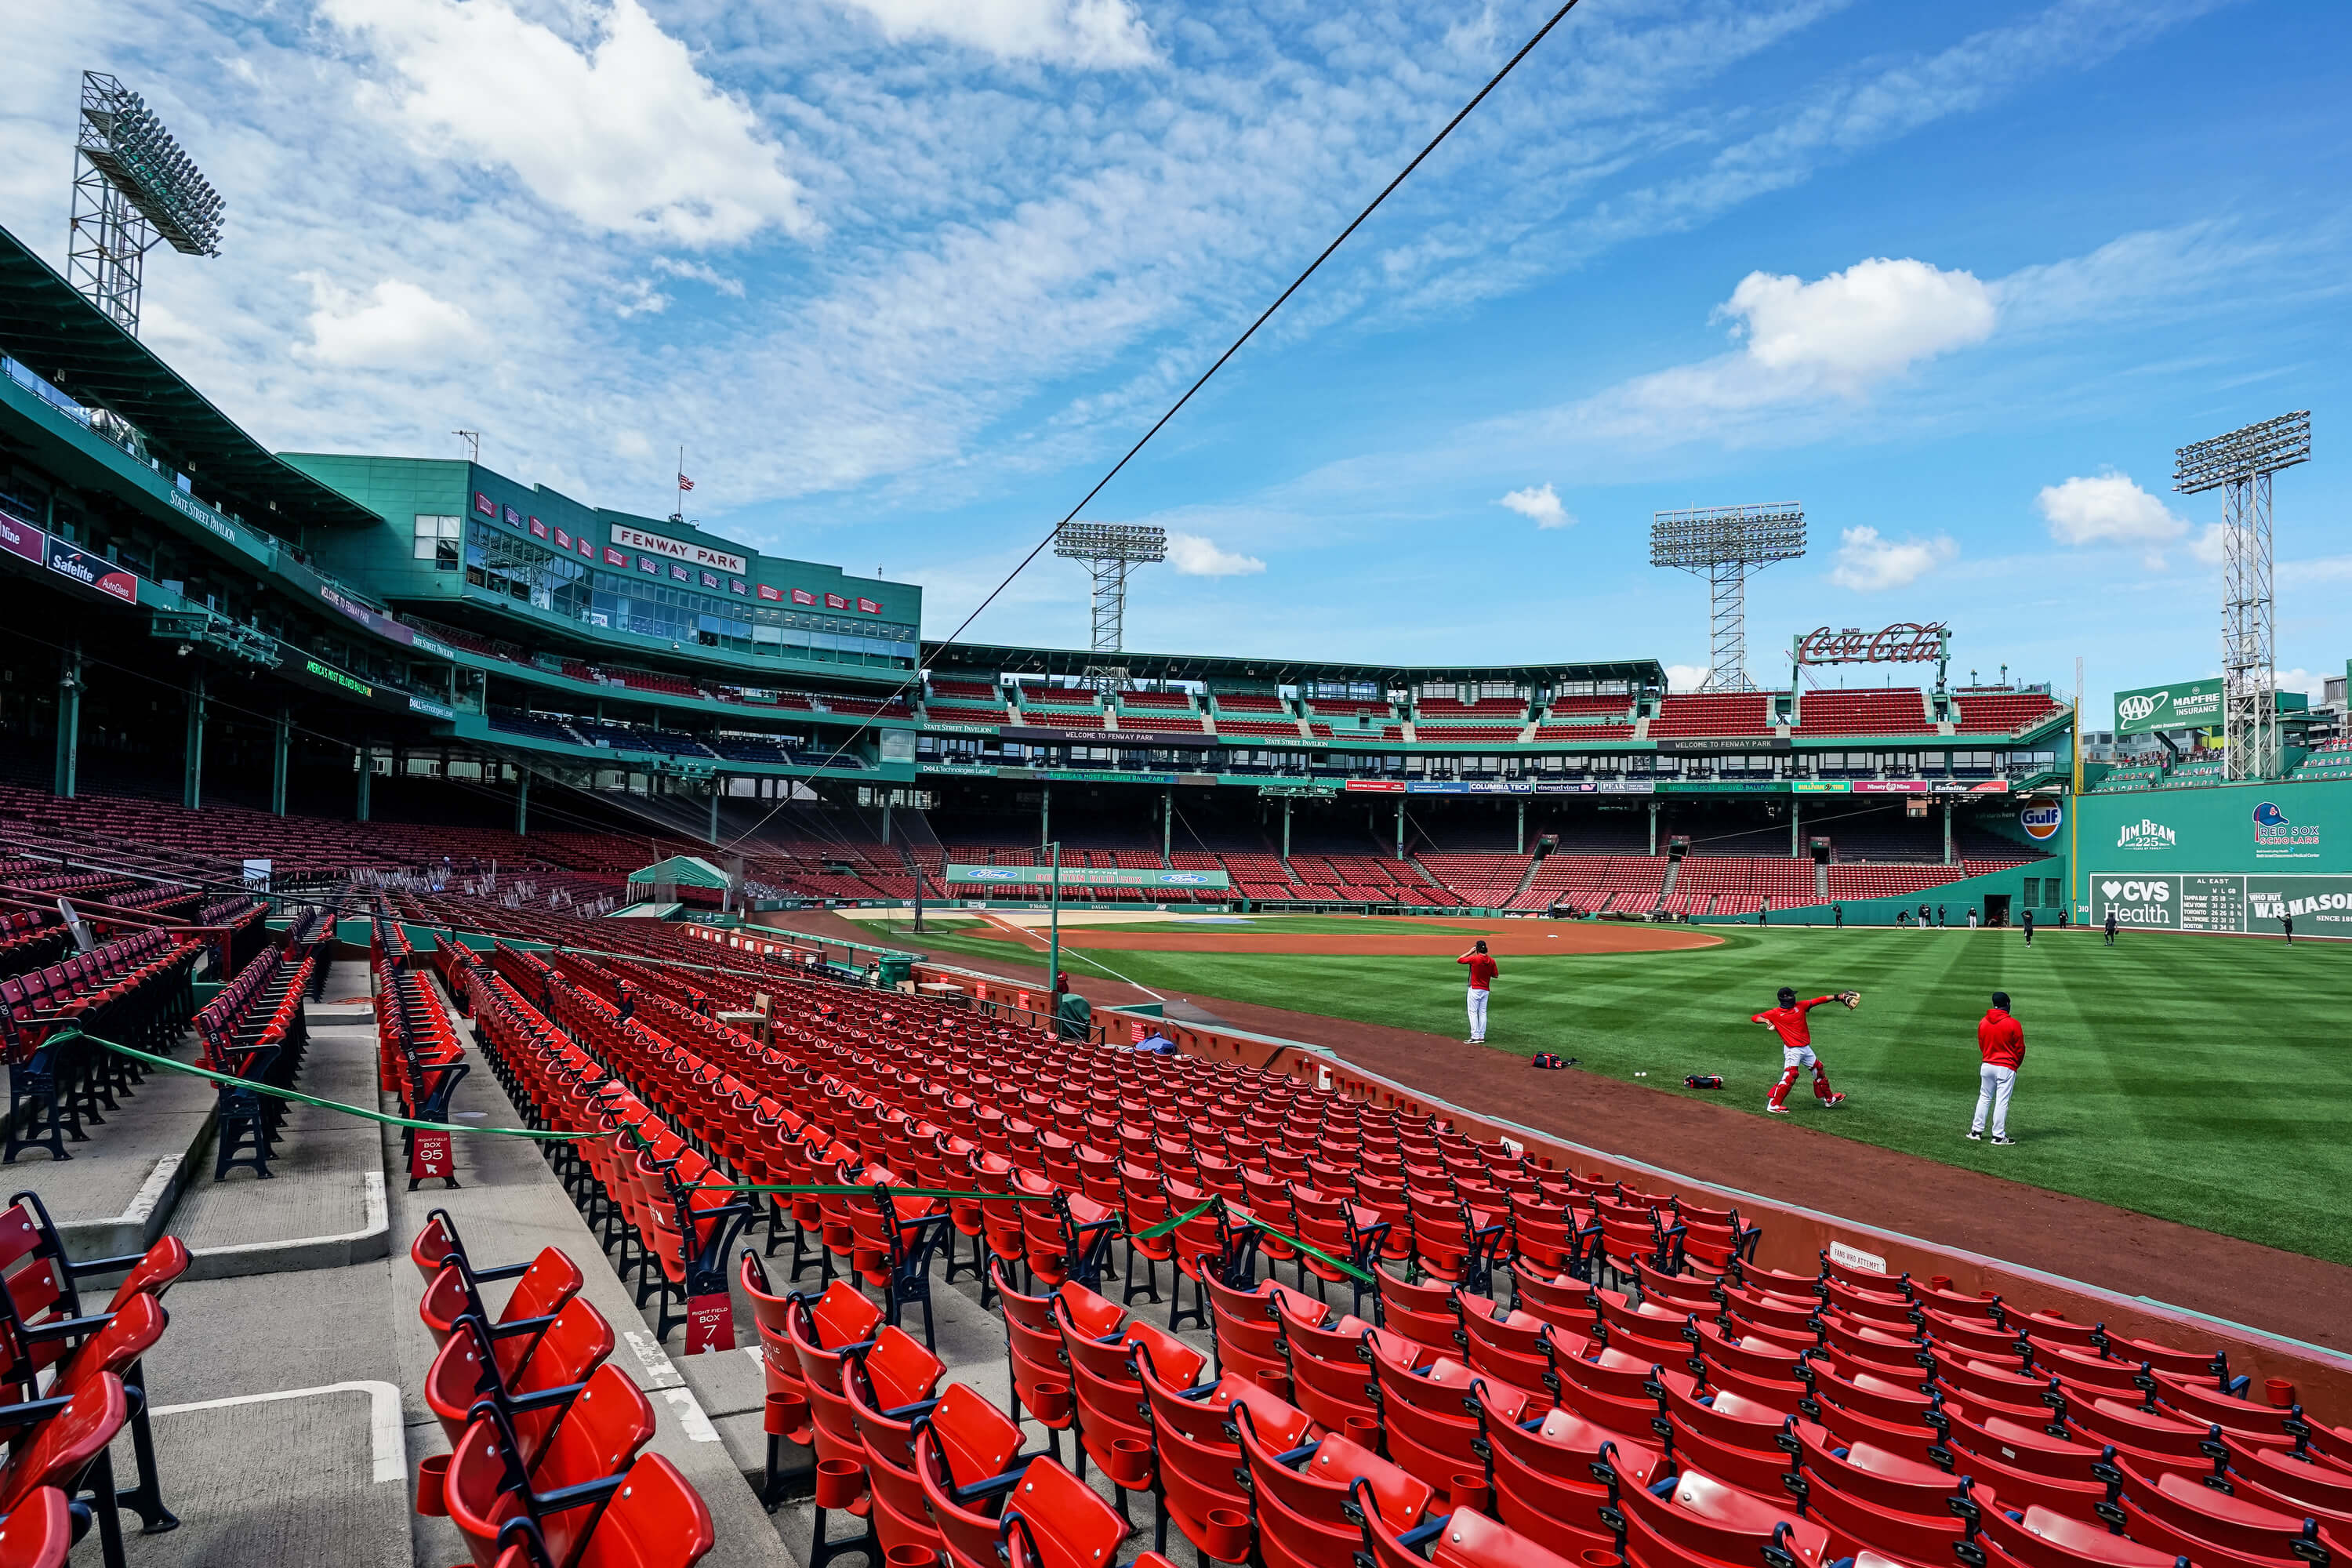 Fenway Park MLB Boston Red Sox